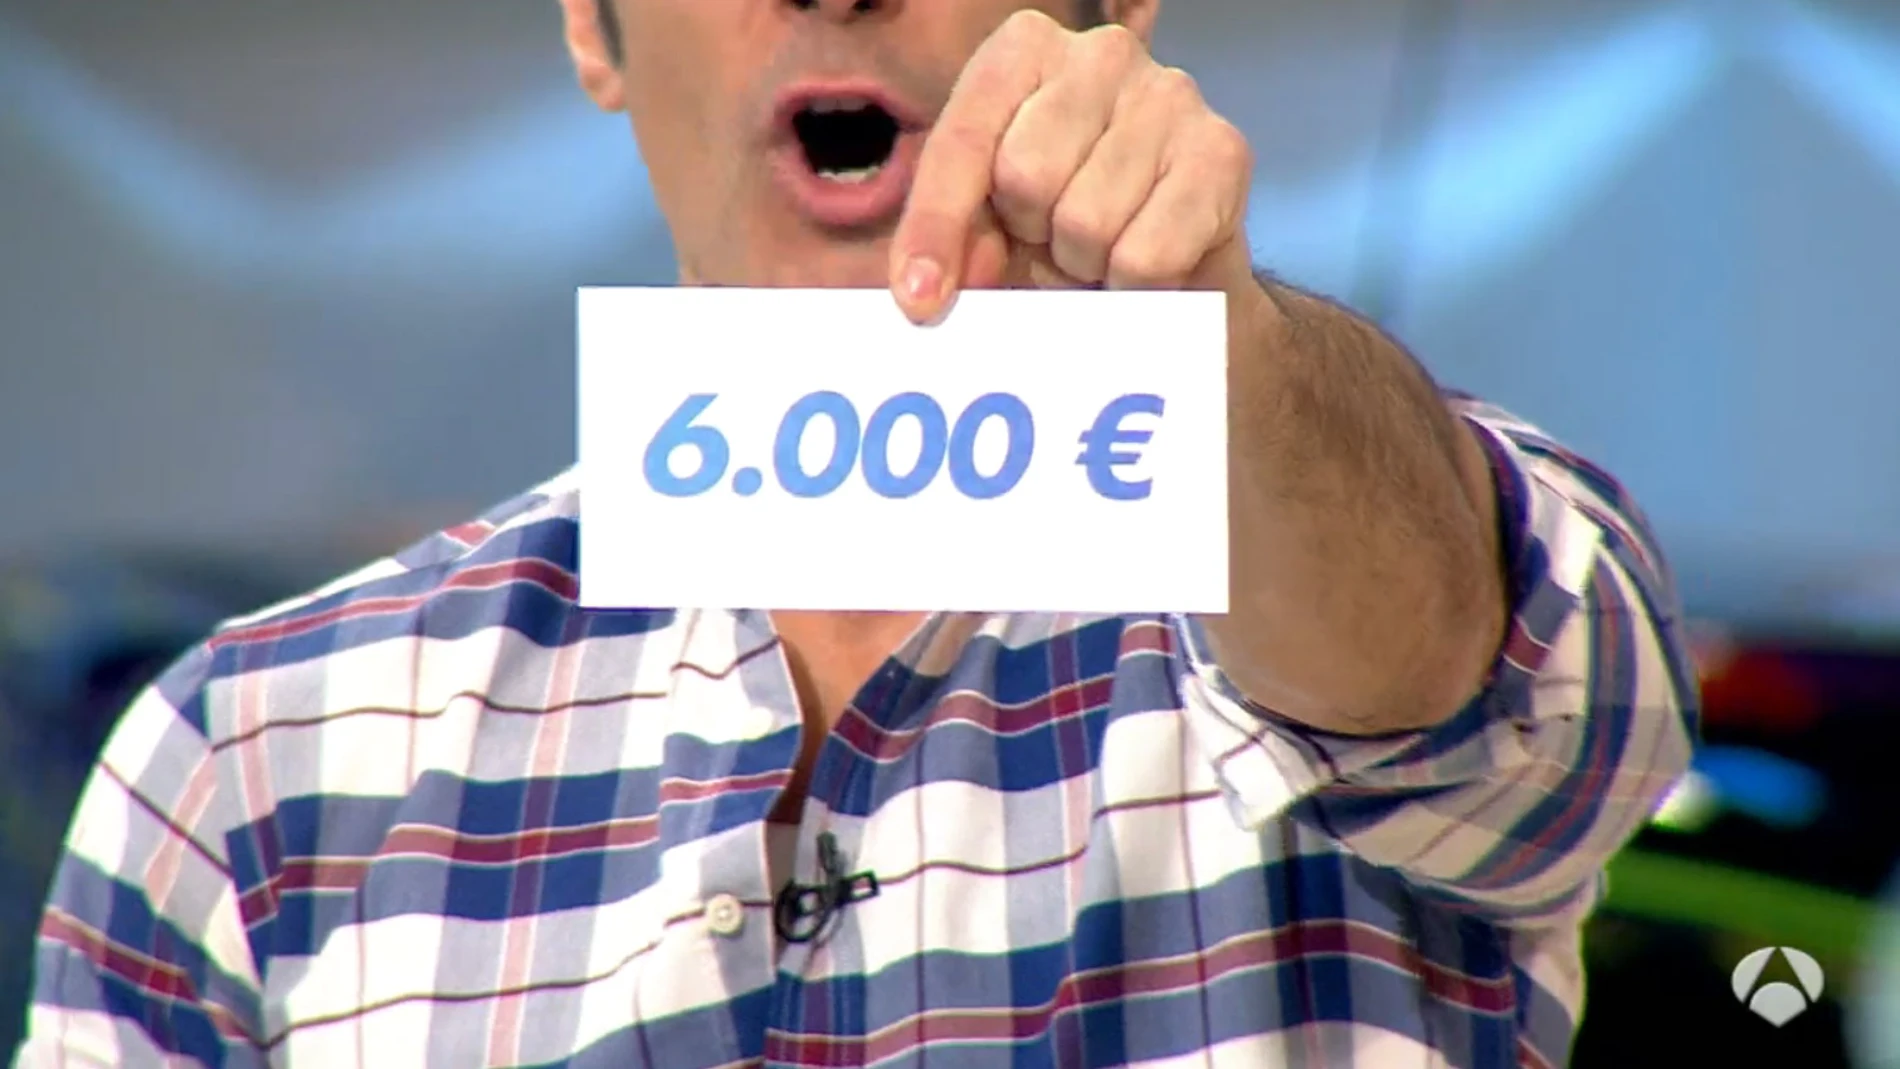 6000 euros de premio